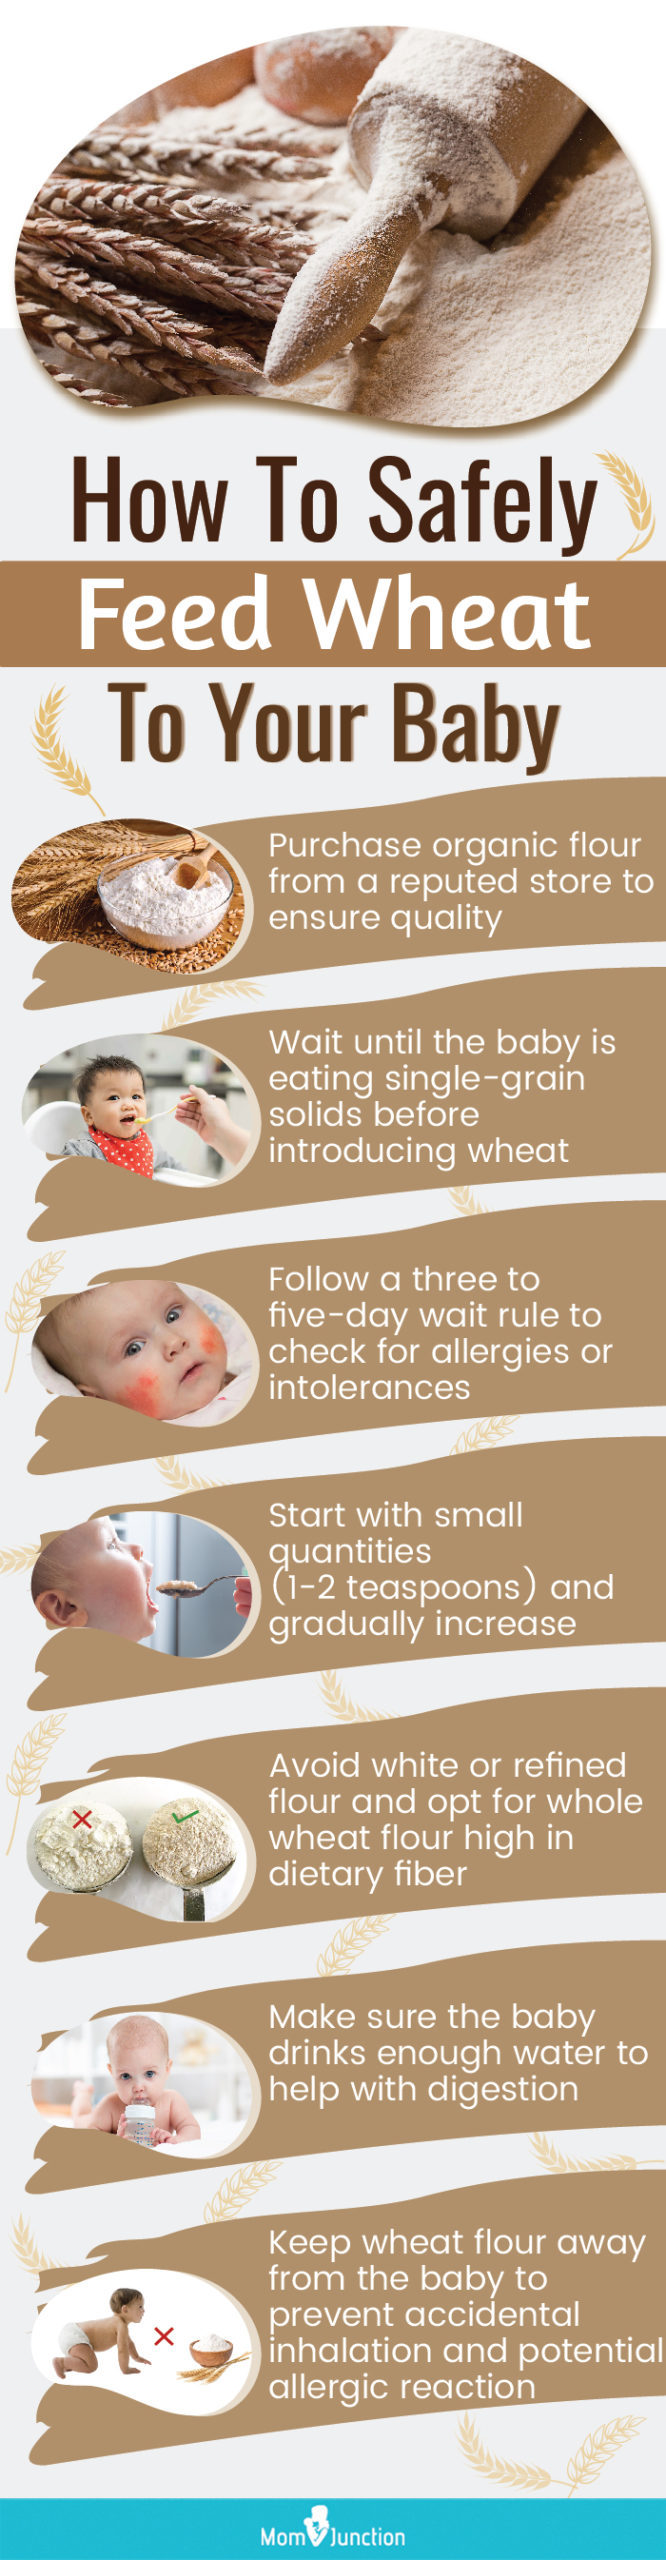 precautions to take while feeding wheat to babies (infographic)